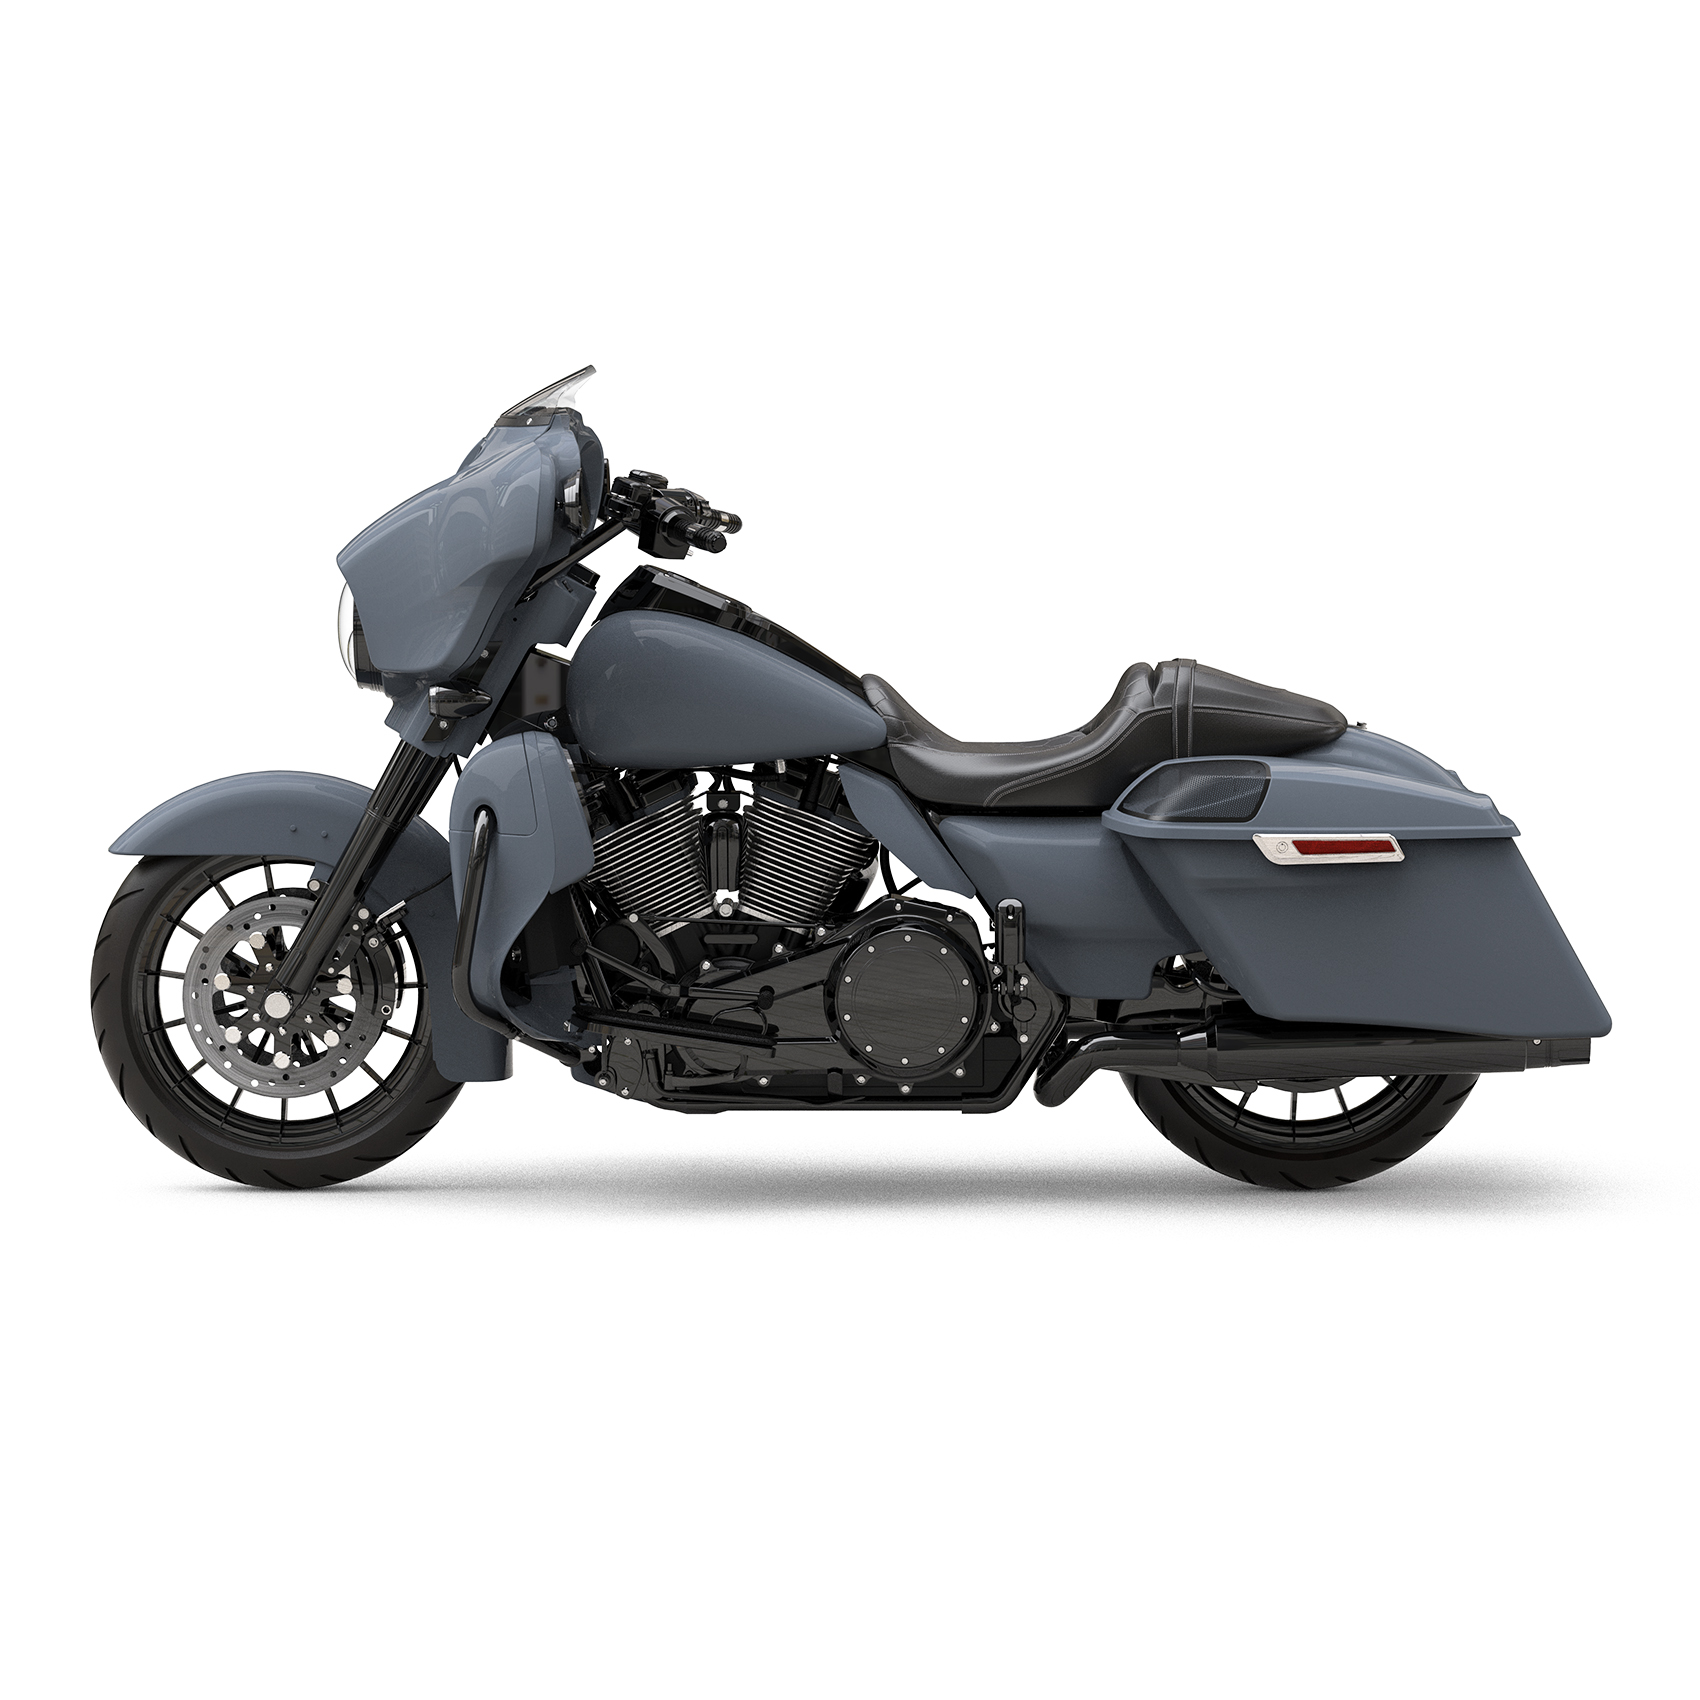 Fairing Air Duct for Harley 2015-2021 Road Glide models,Black Earth & Vivid Black color 